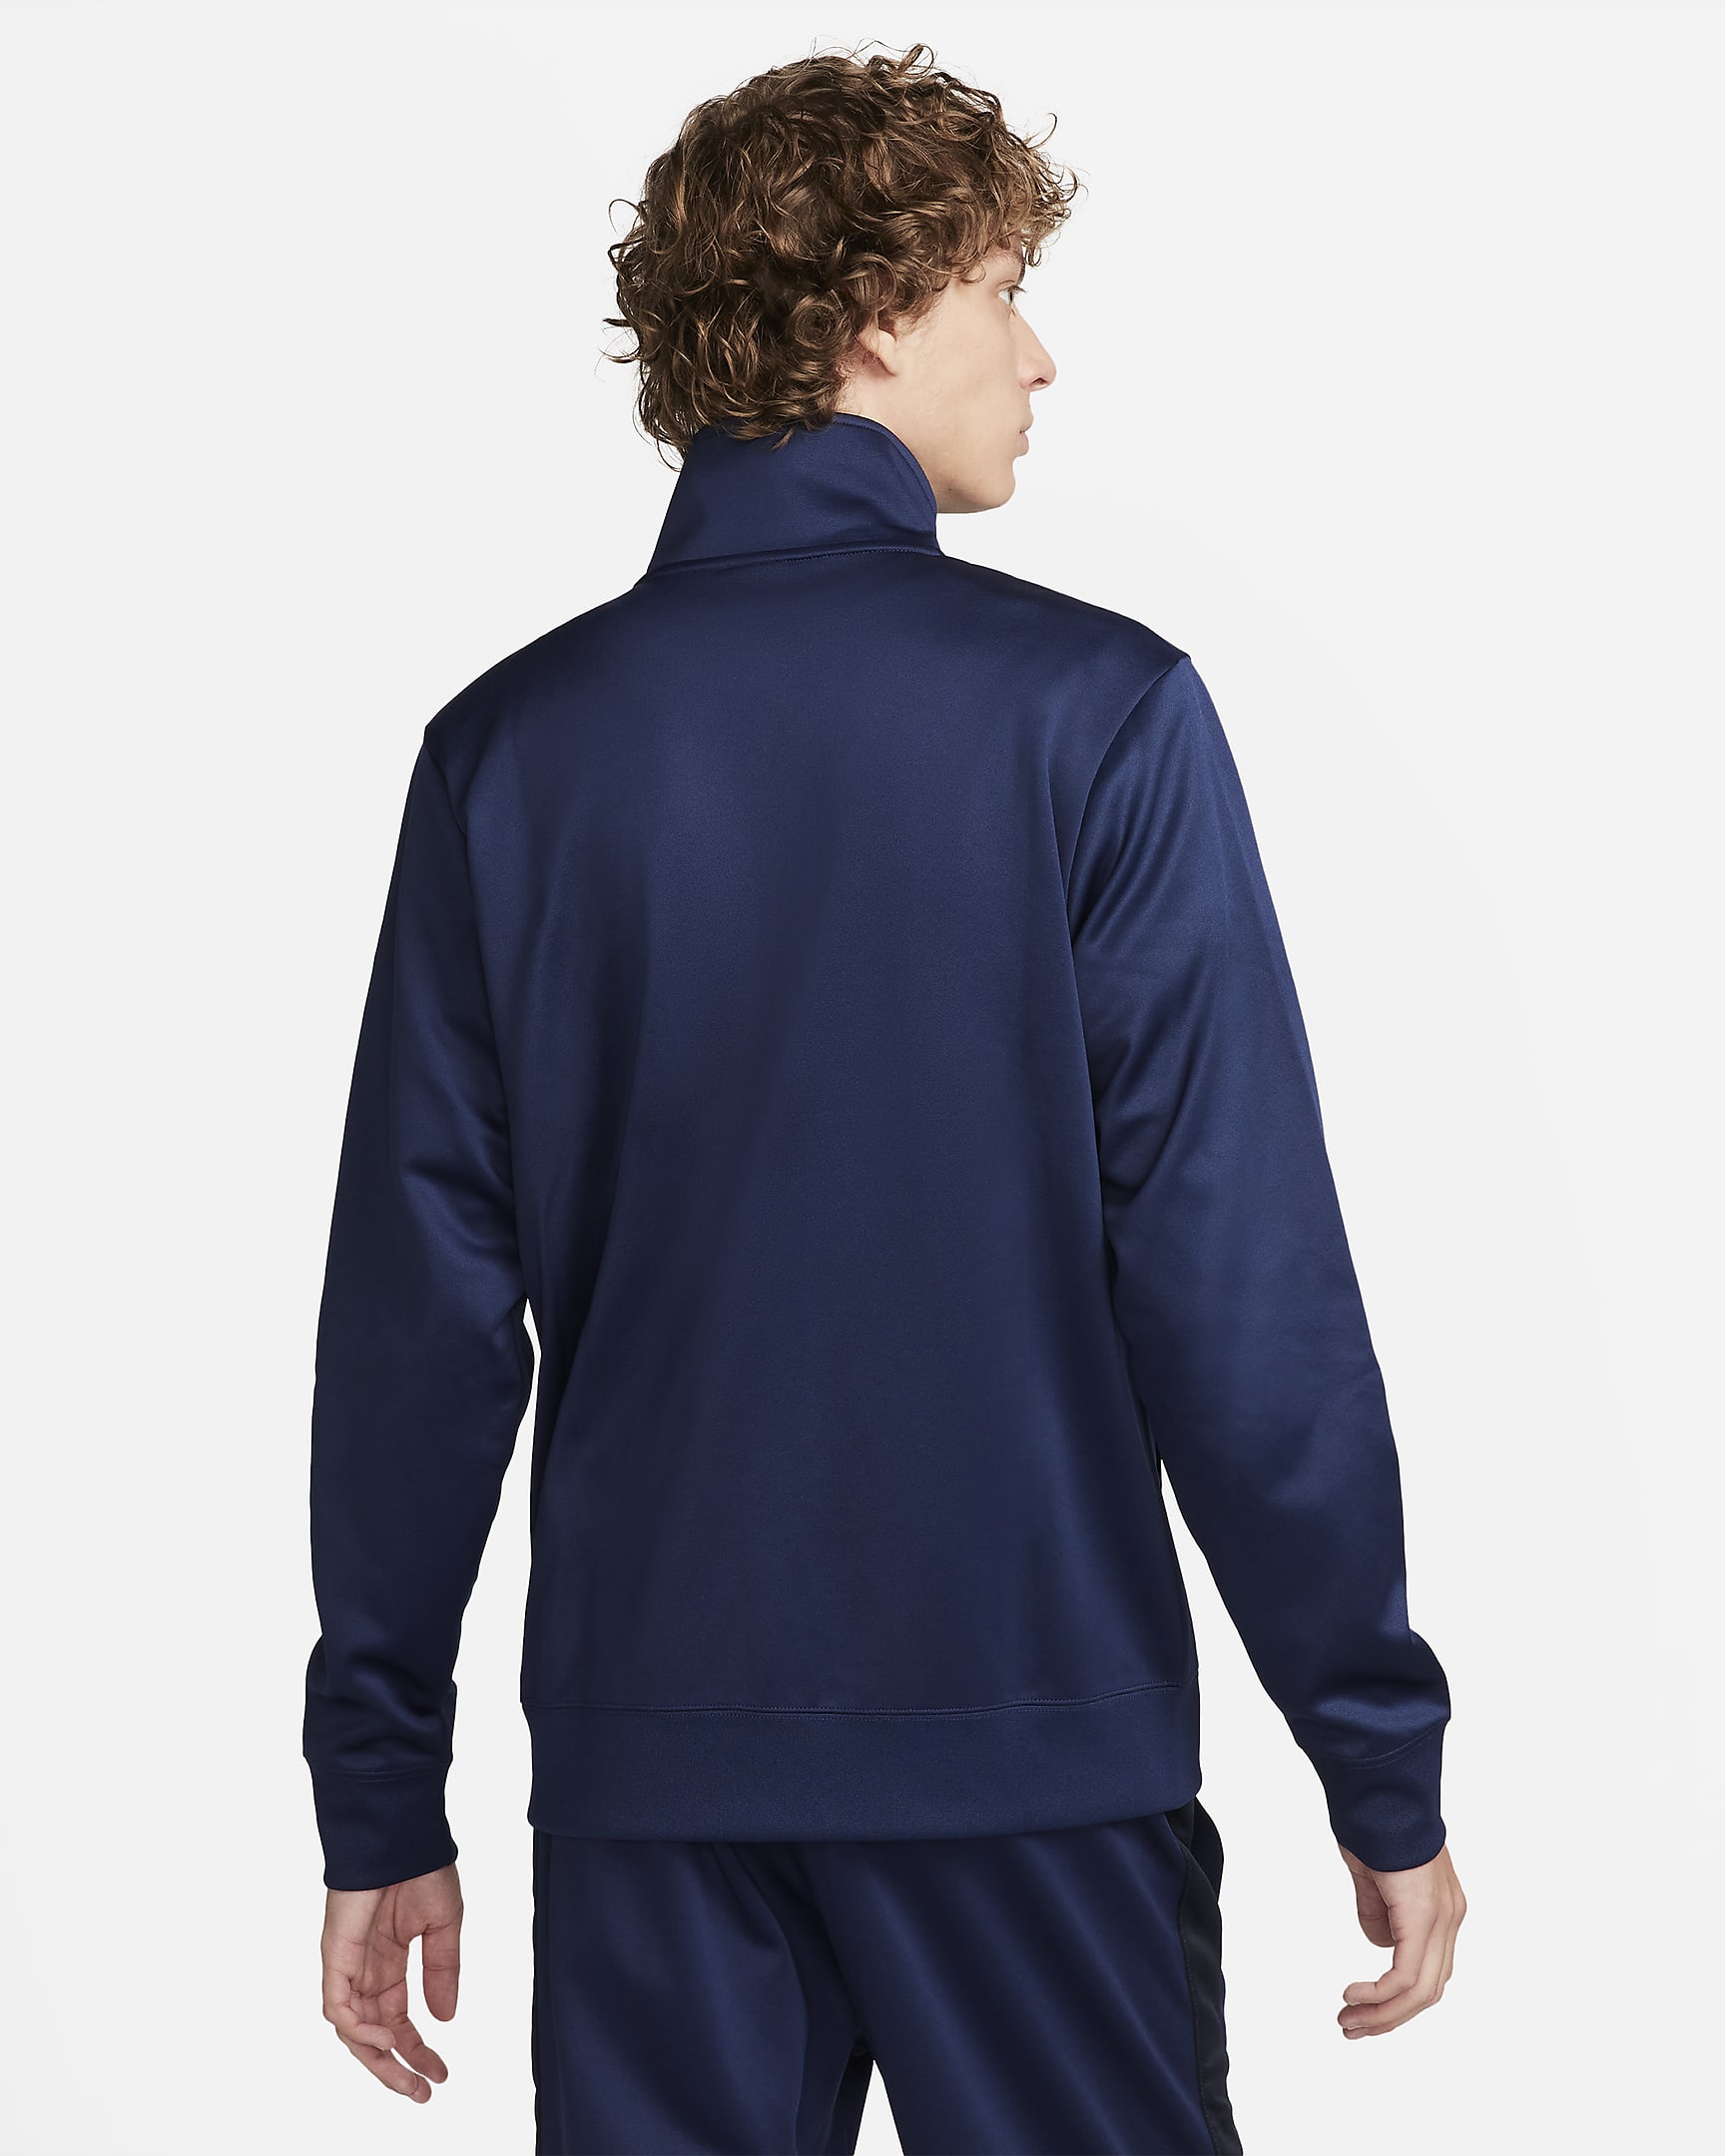 Nike Air Men's Tracksuit Jacket. Nike UK